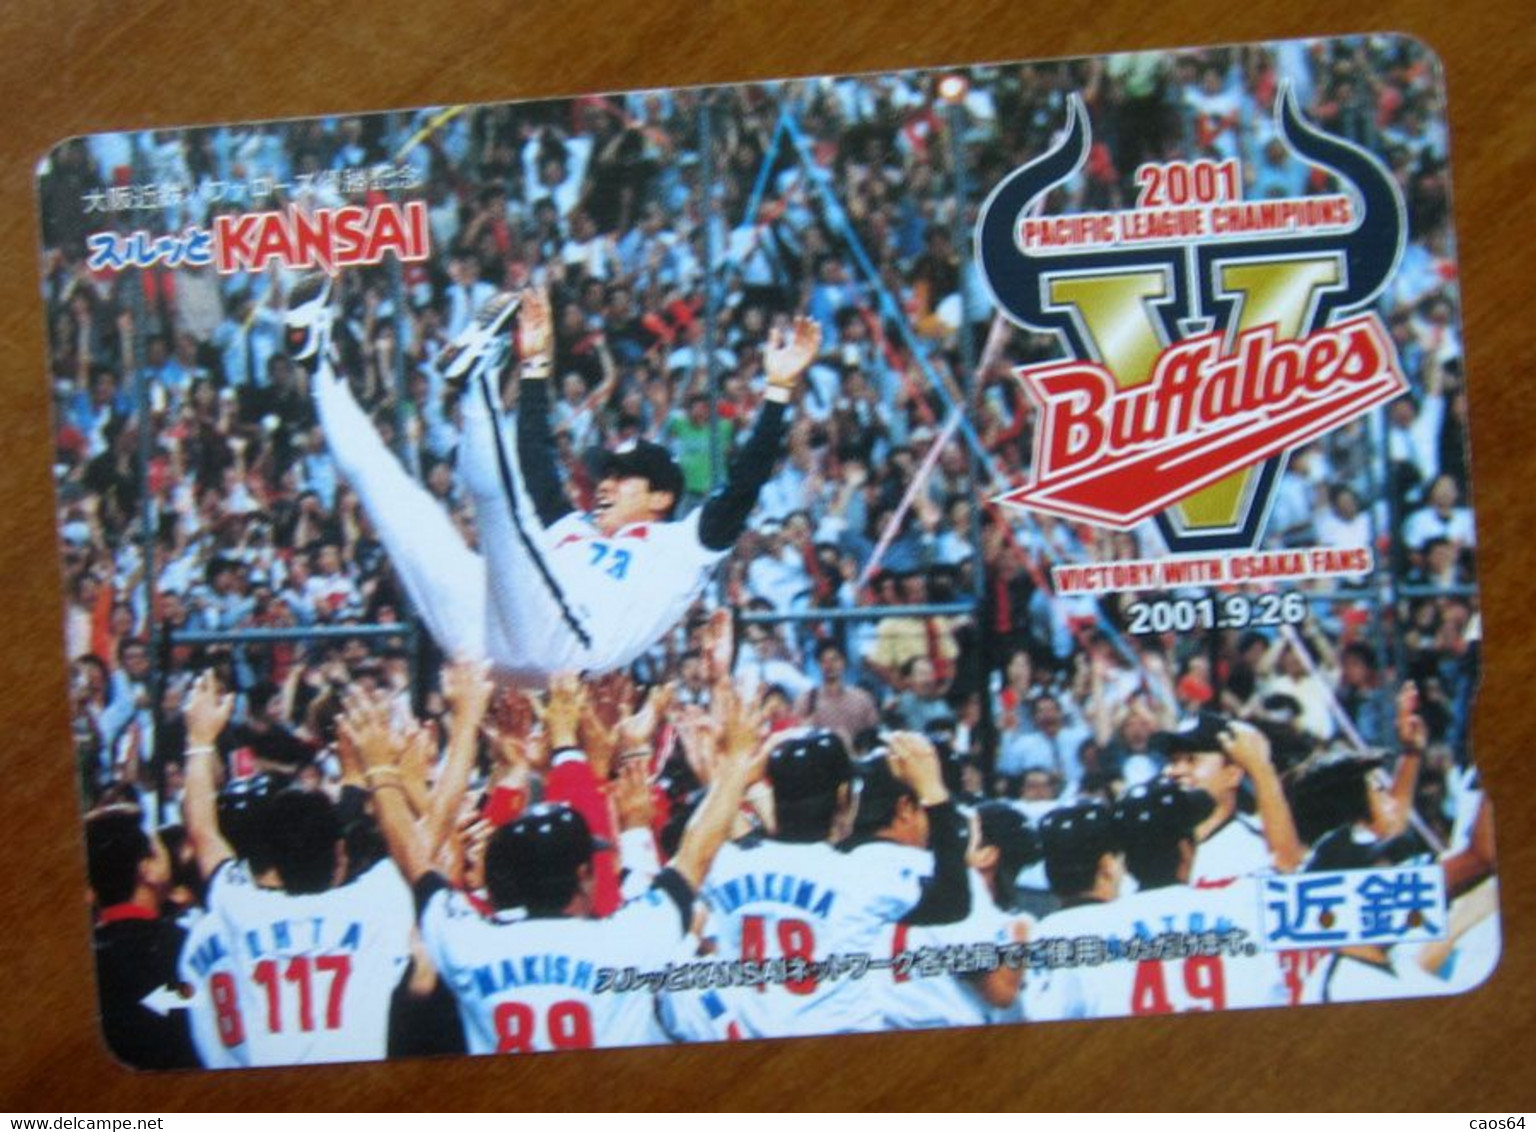 GIAPPONE Ticket Biglietto Sport 2001 Team Baseball Osaka  Buffaloes - Kansai Railway  Card 1.000 ¥ - Usato - Welt